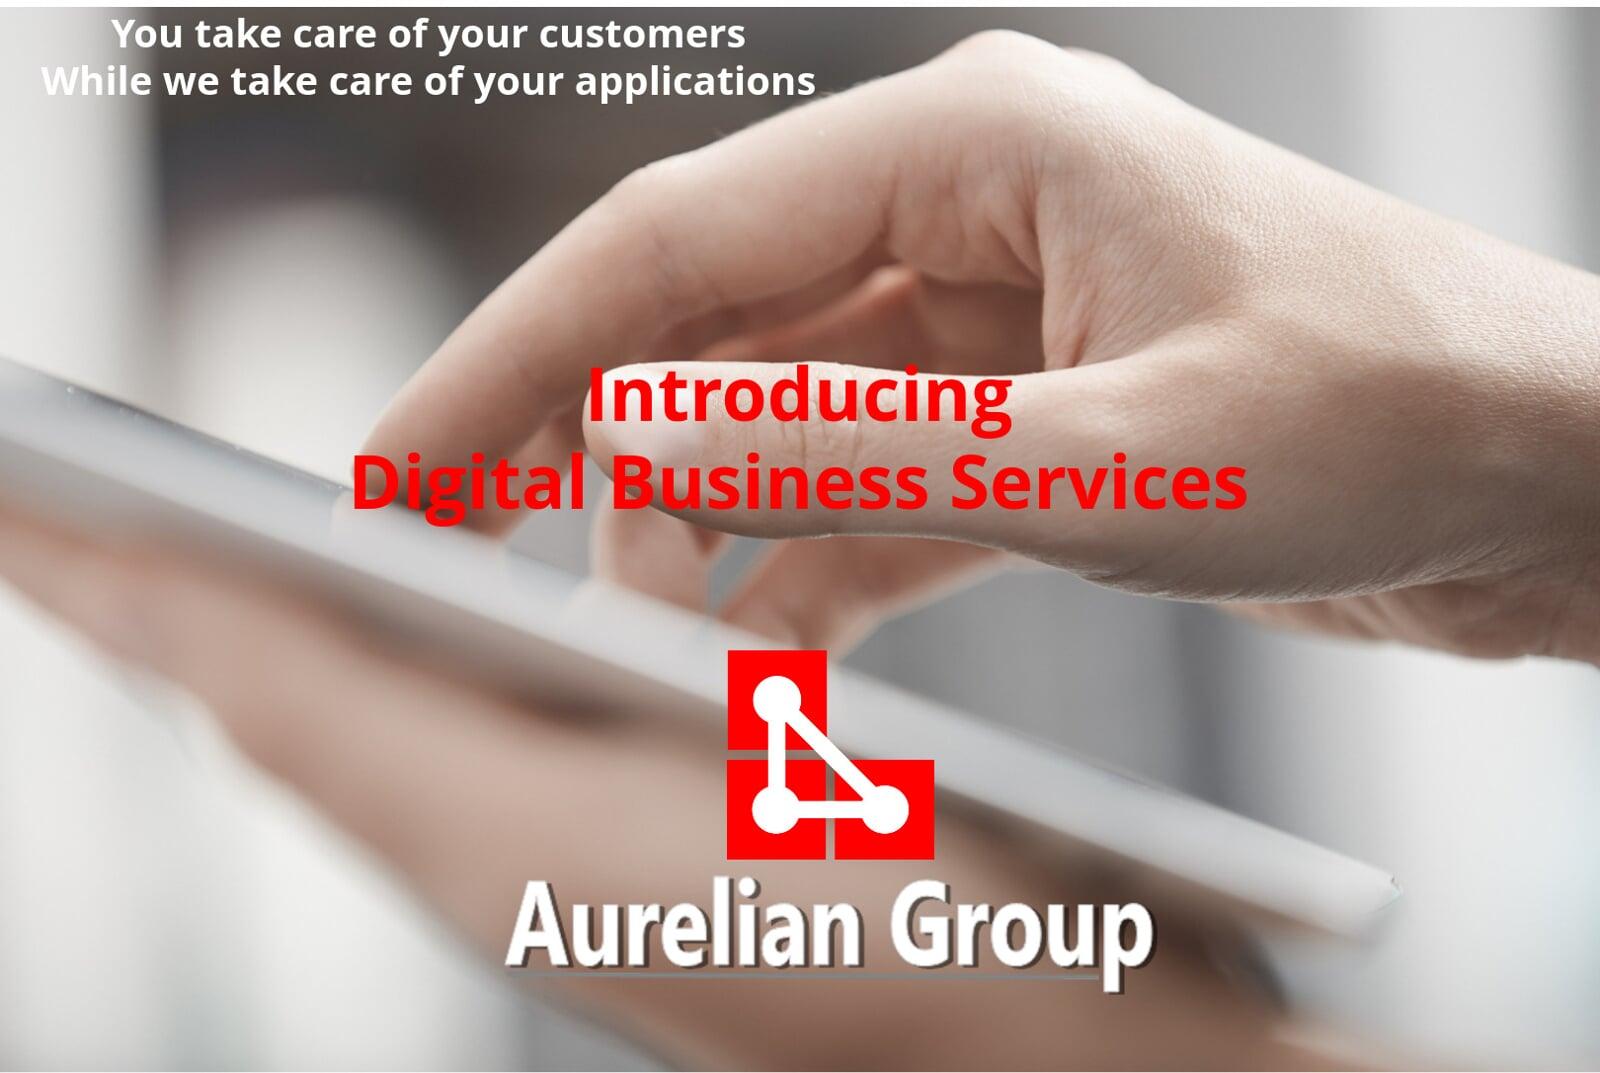 Aurelian Group introduces Digital Business Services